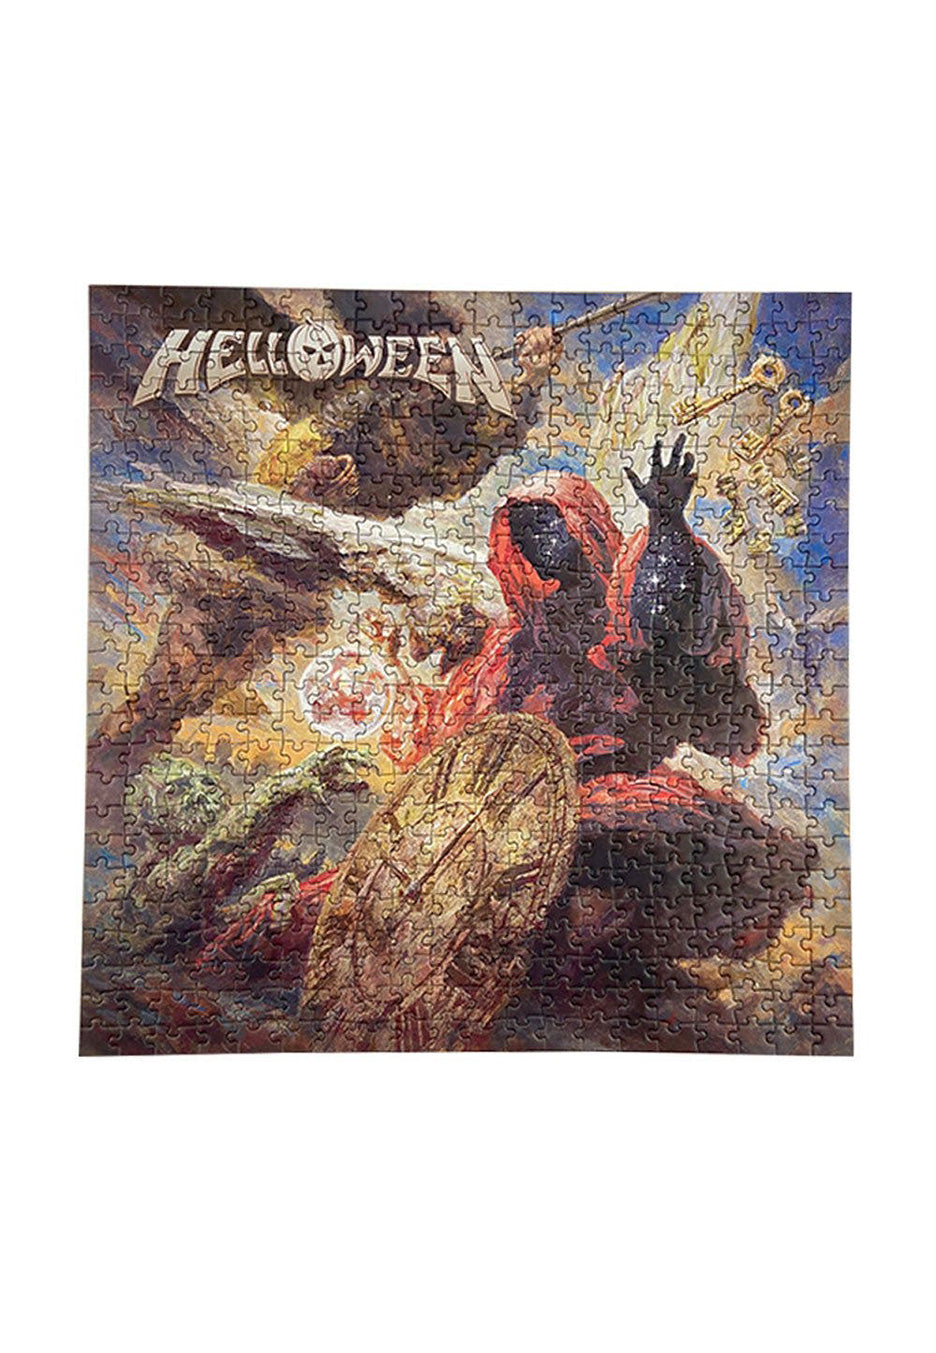 Helloween - Helloween Cover - Jigsaw Puzzle